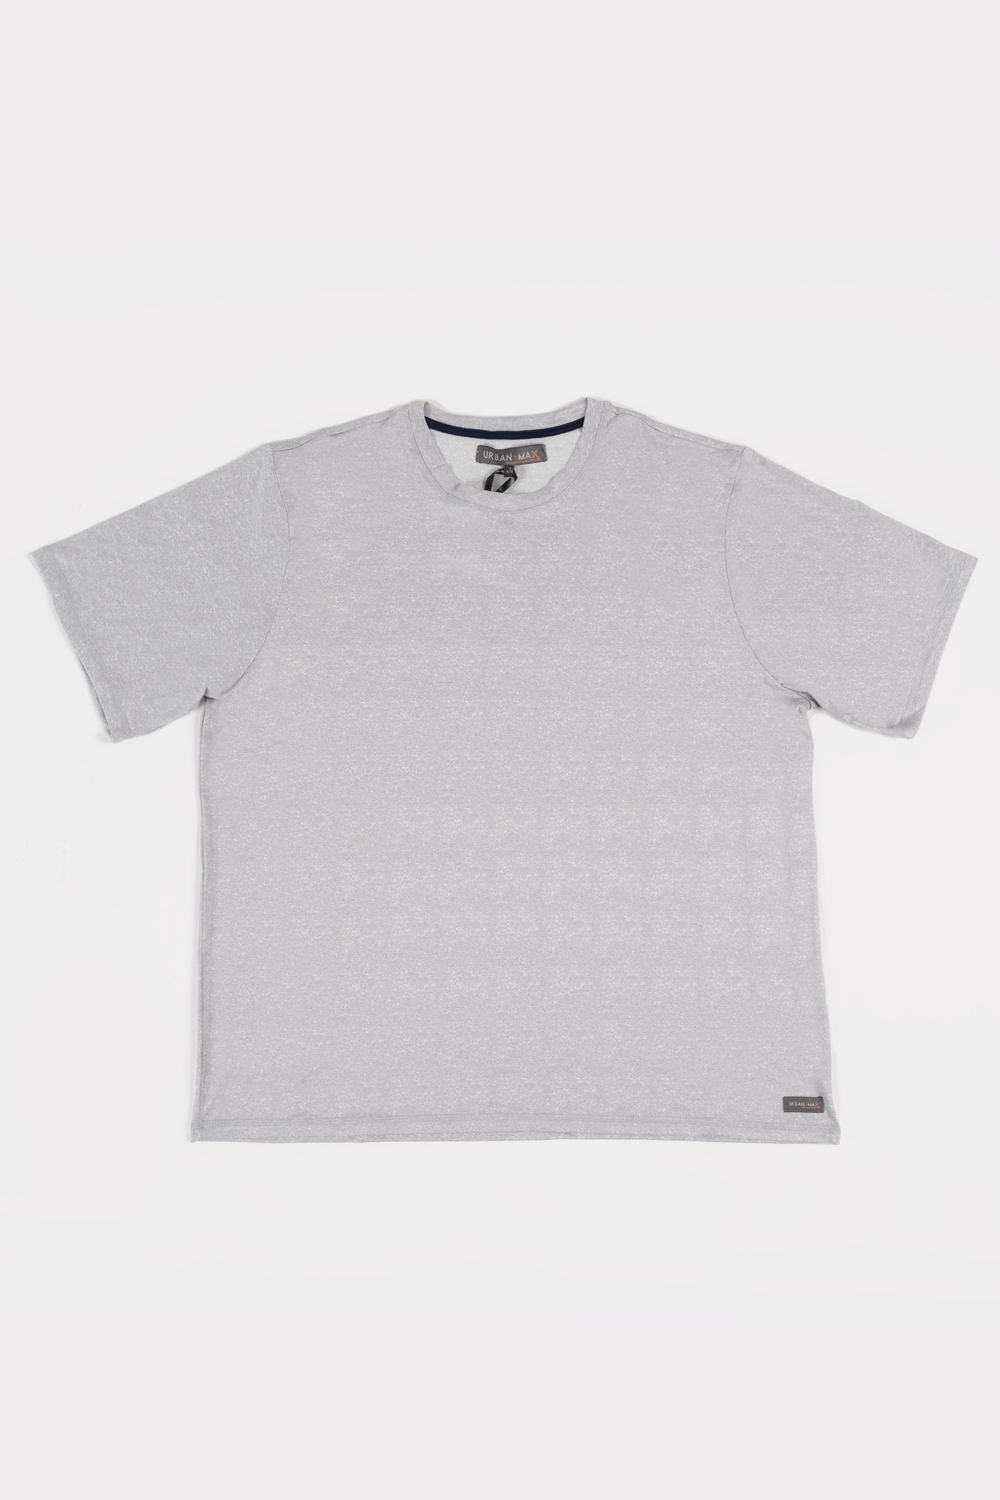 Short sleeve jersey knit shirt for men - Heather grey - Plus Size